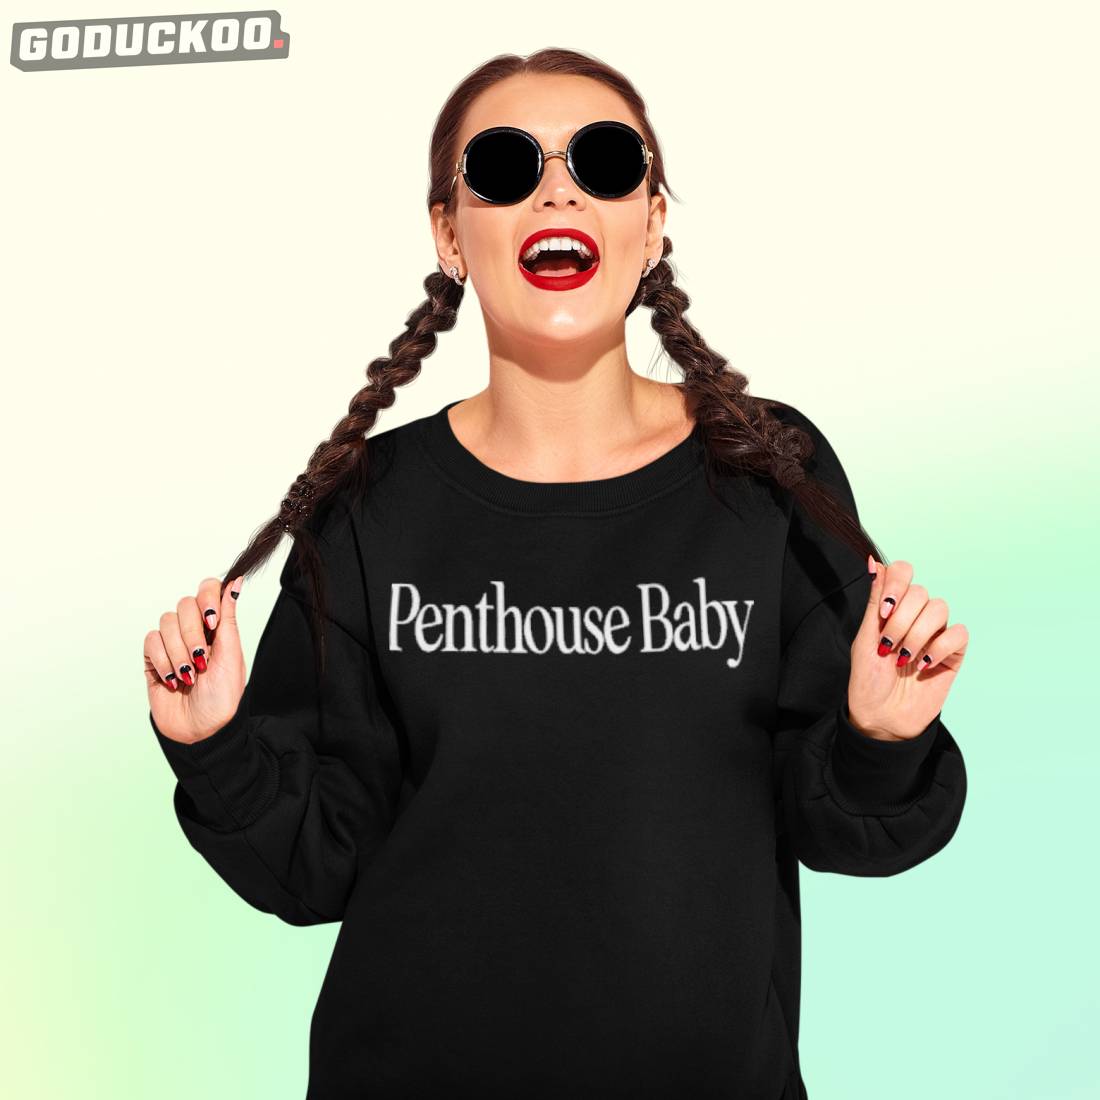 Penthouse Baby Kelsea Ballerini Shirt shopiycenter